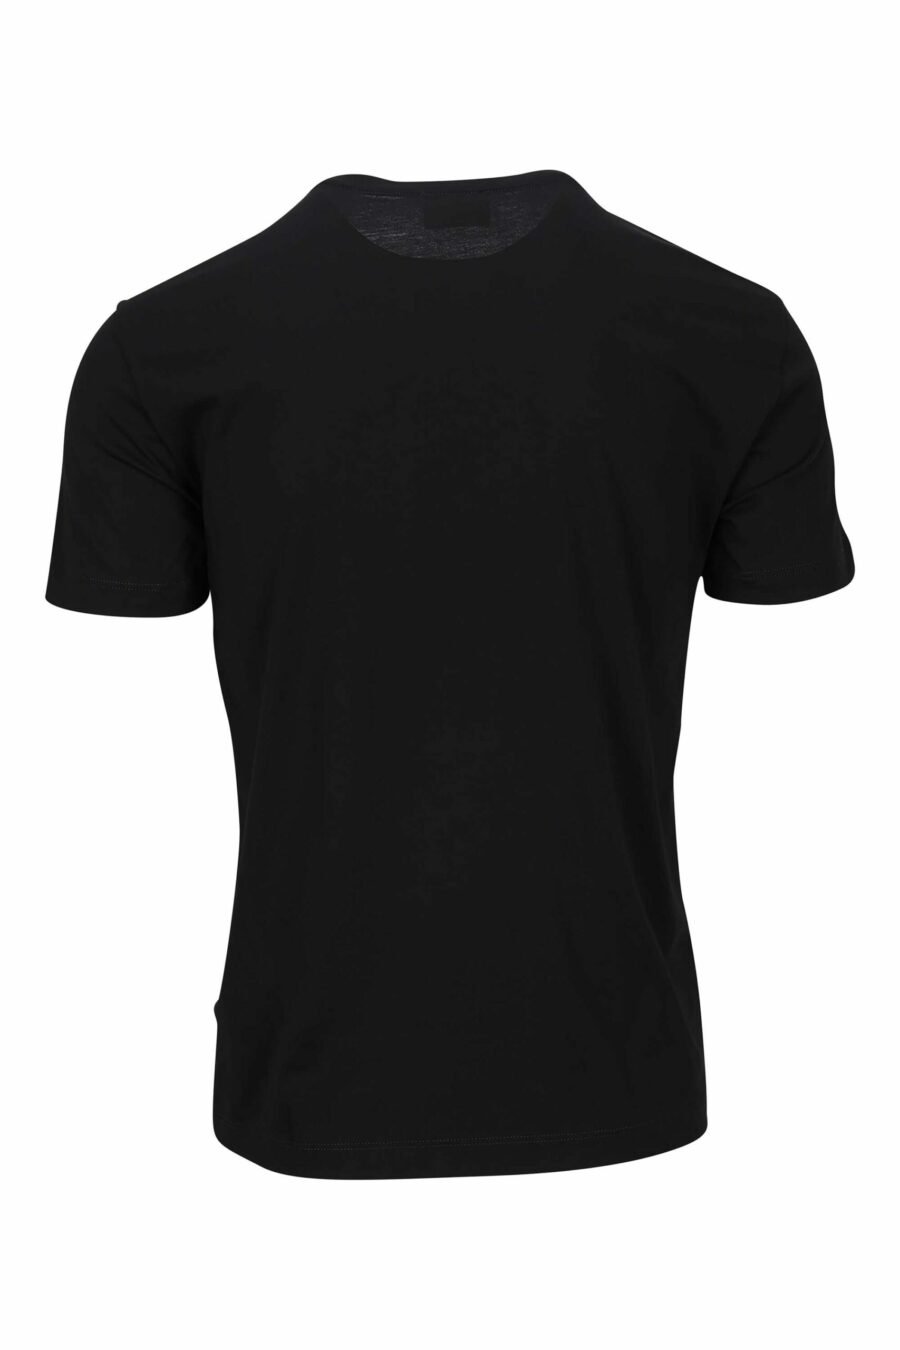 Camiseta negra con maxilogo dorado "lux identity" - 8056787951167 1 scaled